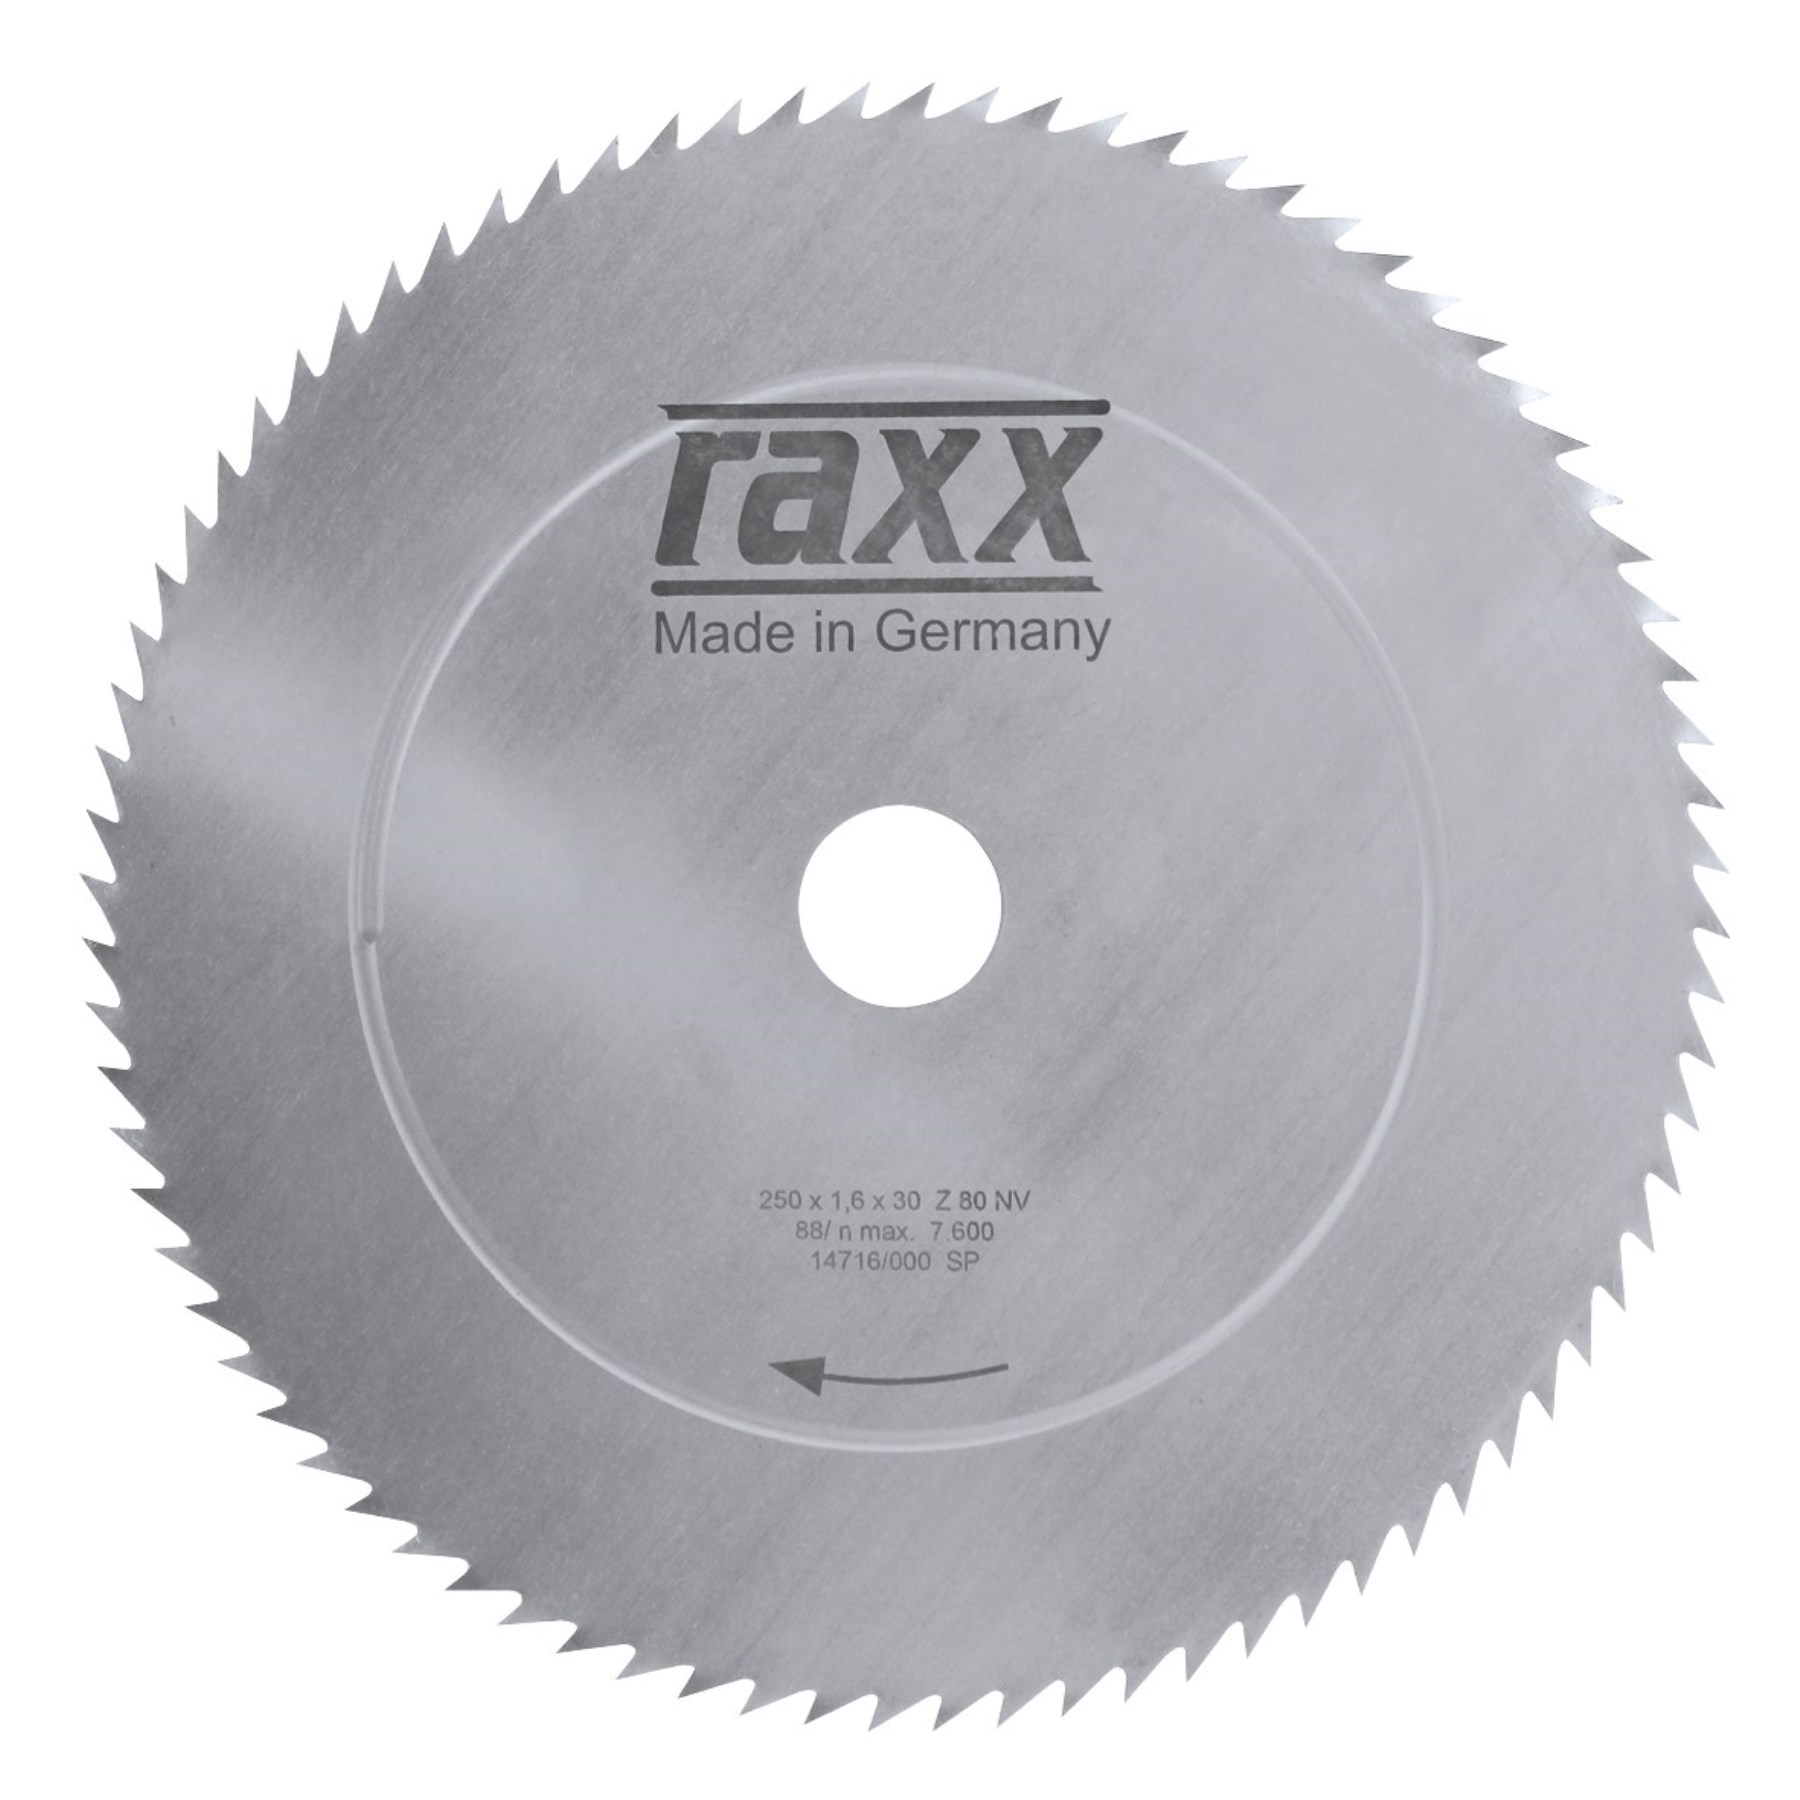 RAXX 1205036 kotouč k okružní pile 250x1,6x30 [ 7250300800060410 ]